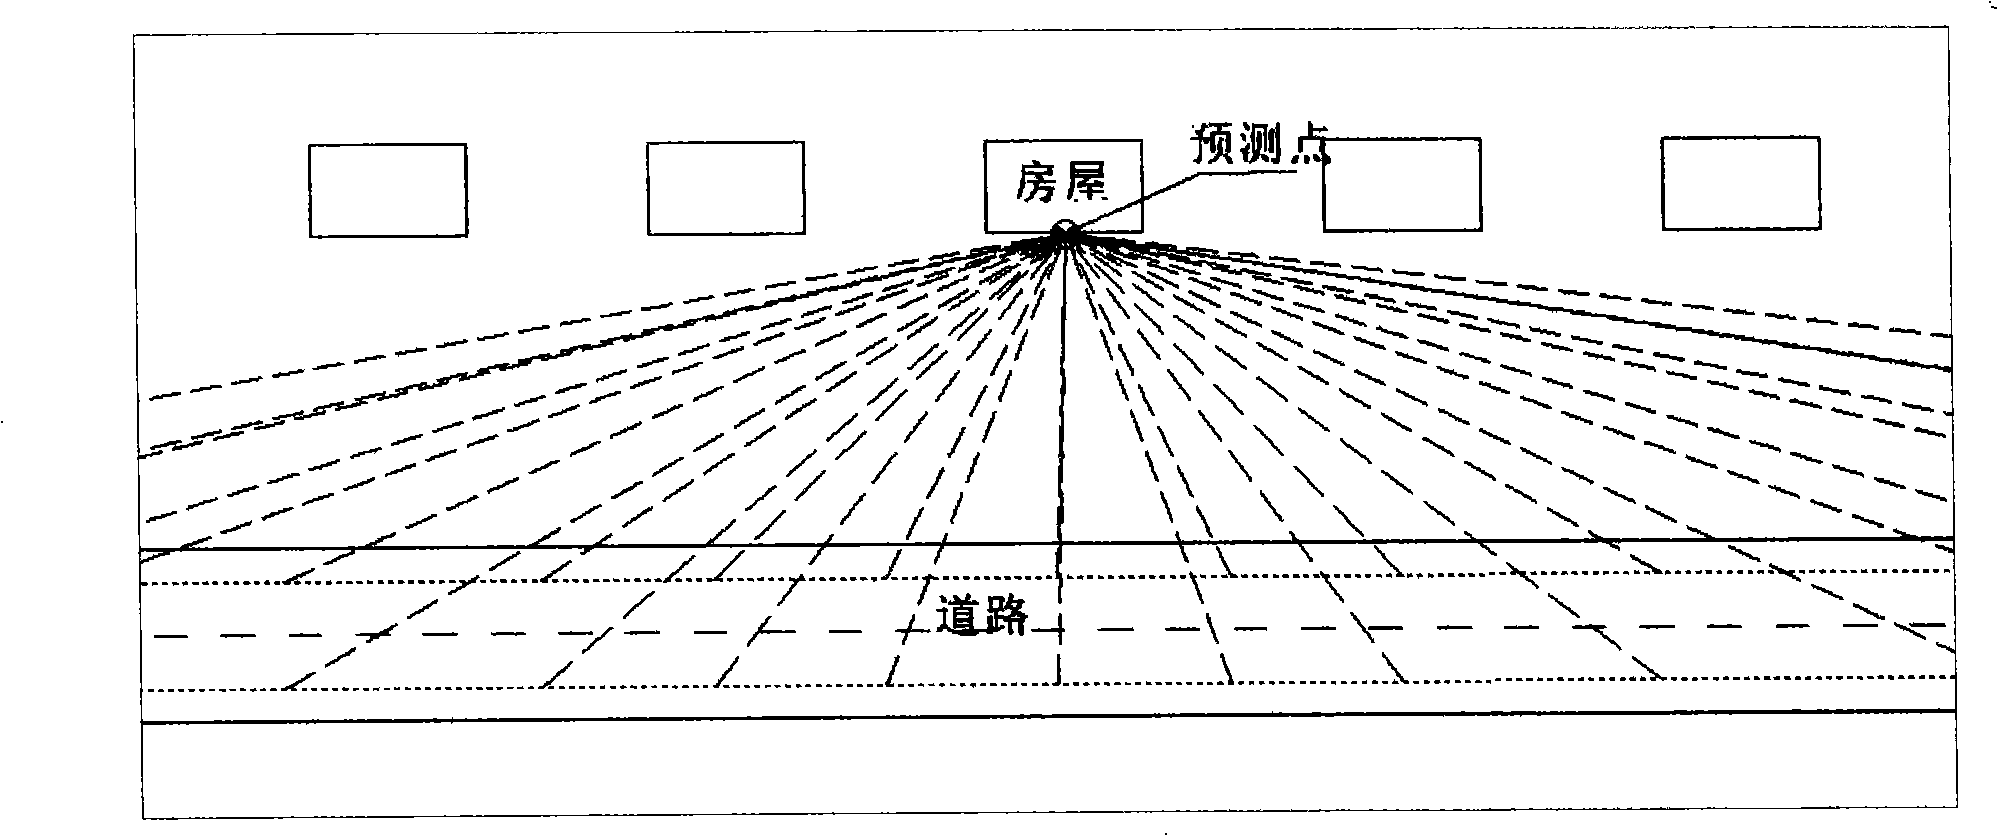 Acoustic design method for road noise barrier